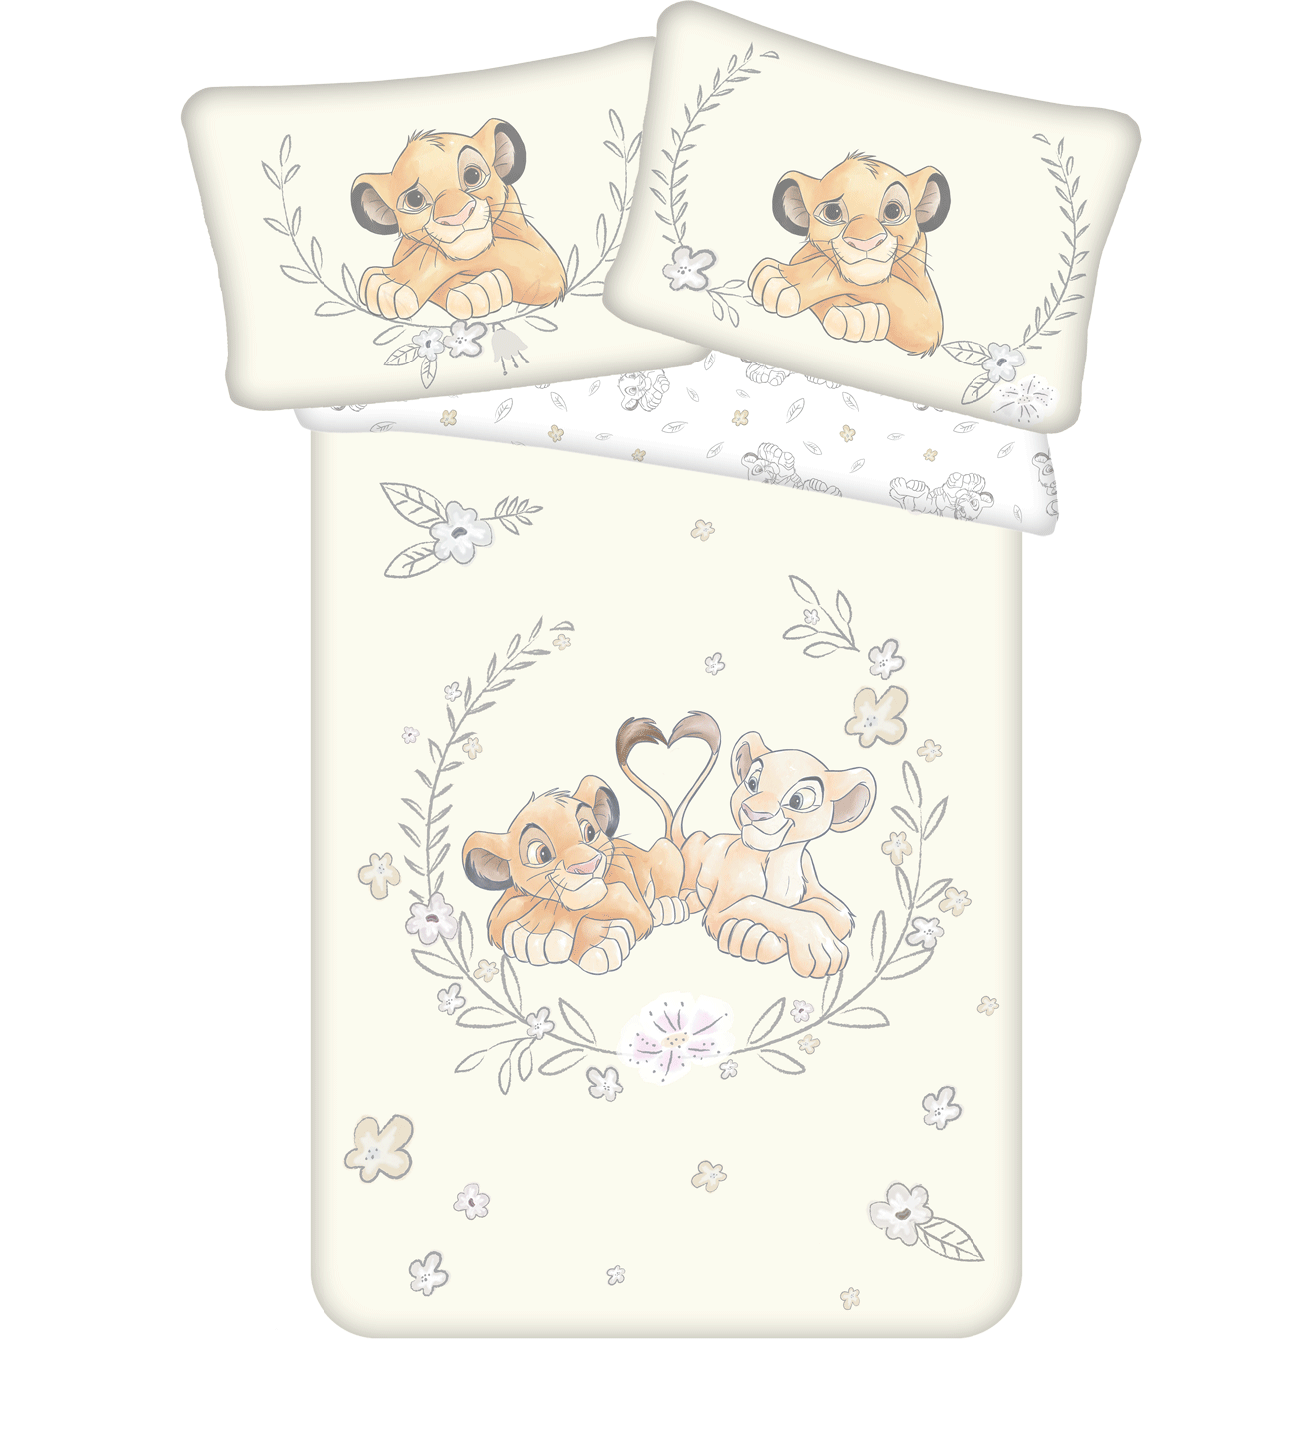 2pc Baby Duvet Cover Bedding Set Reversible Cotton Disney Lion King 03 135x100